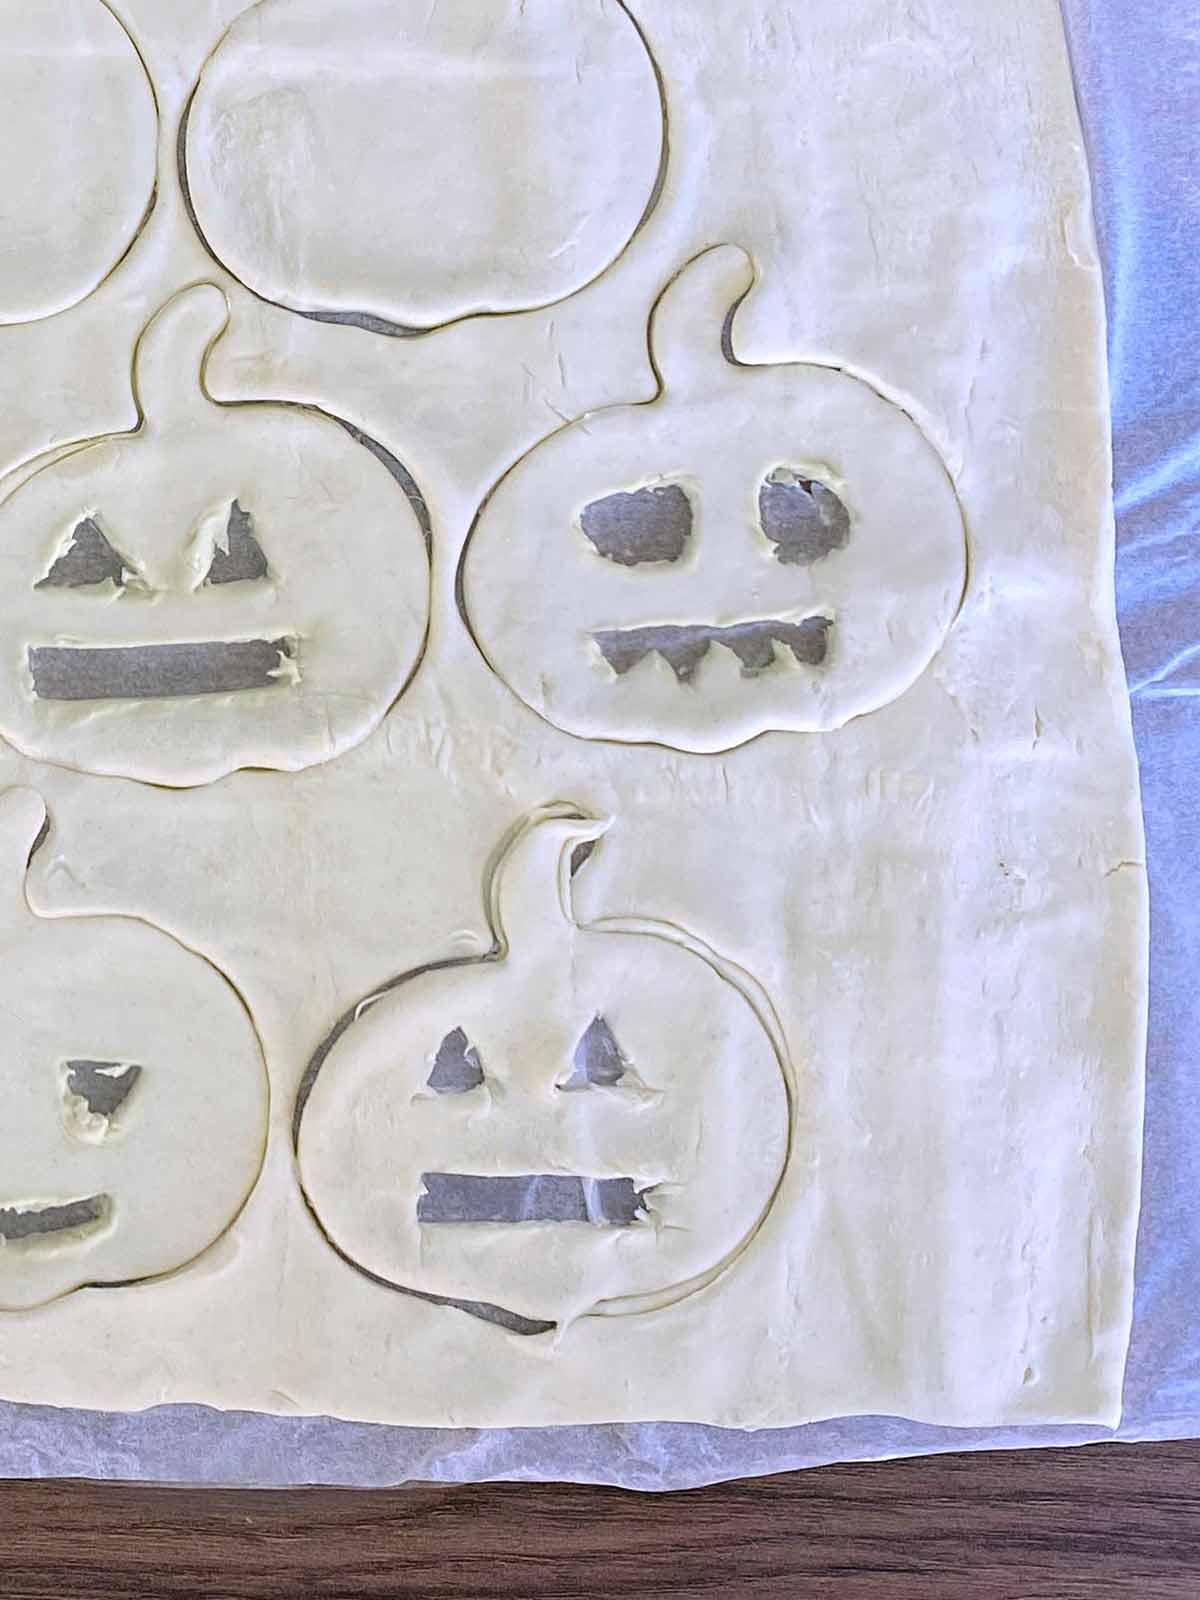 Jack O'Lantern faces cut into the pumpkin shapes.